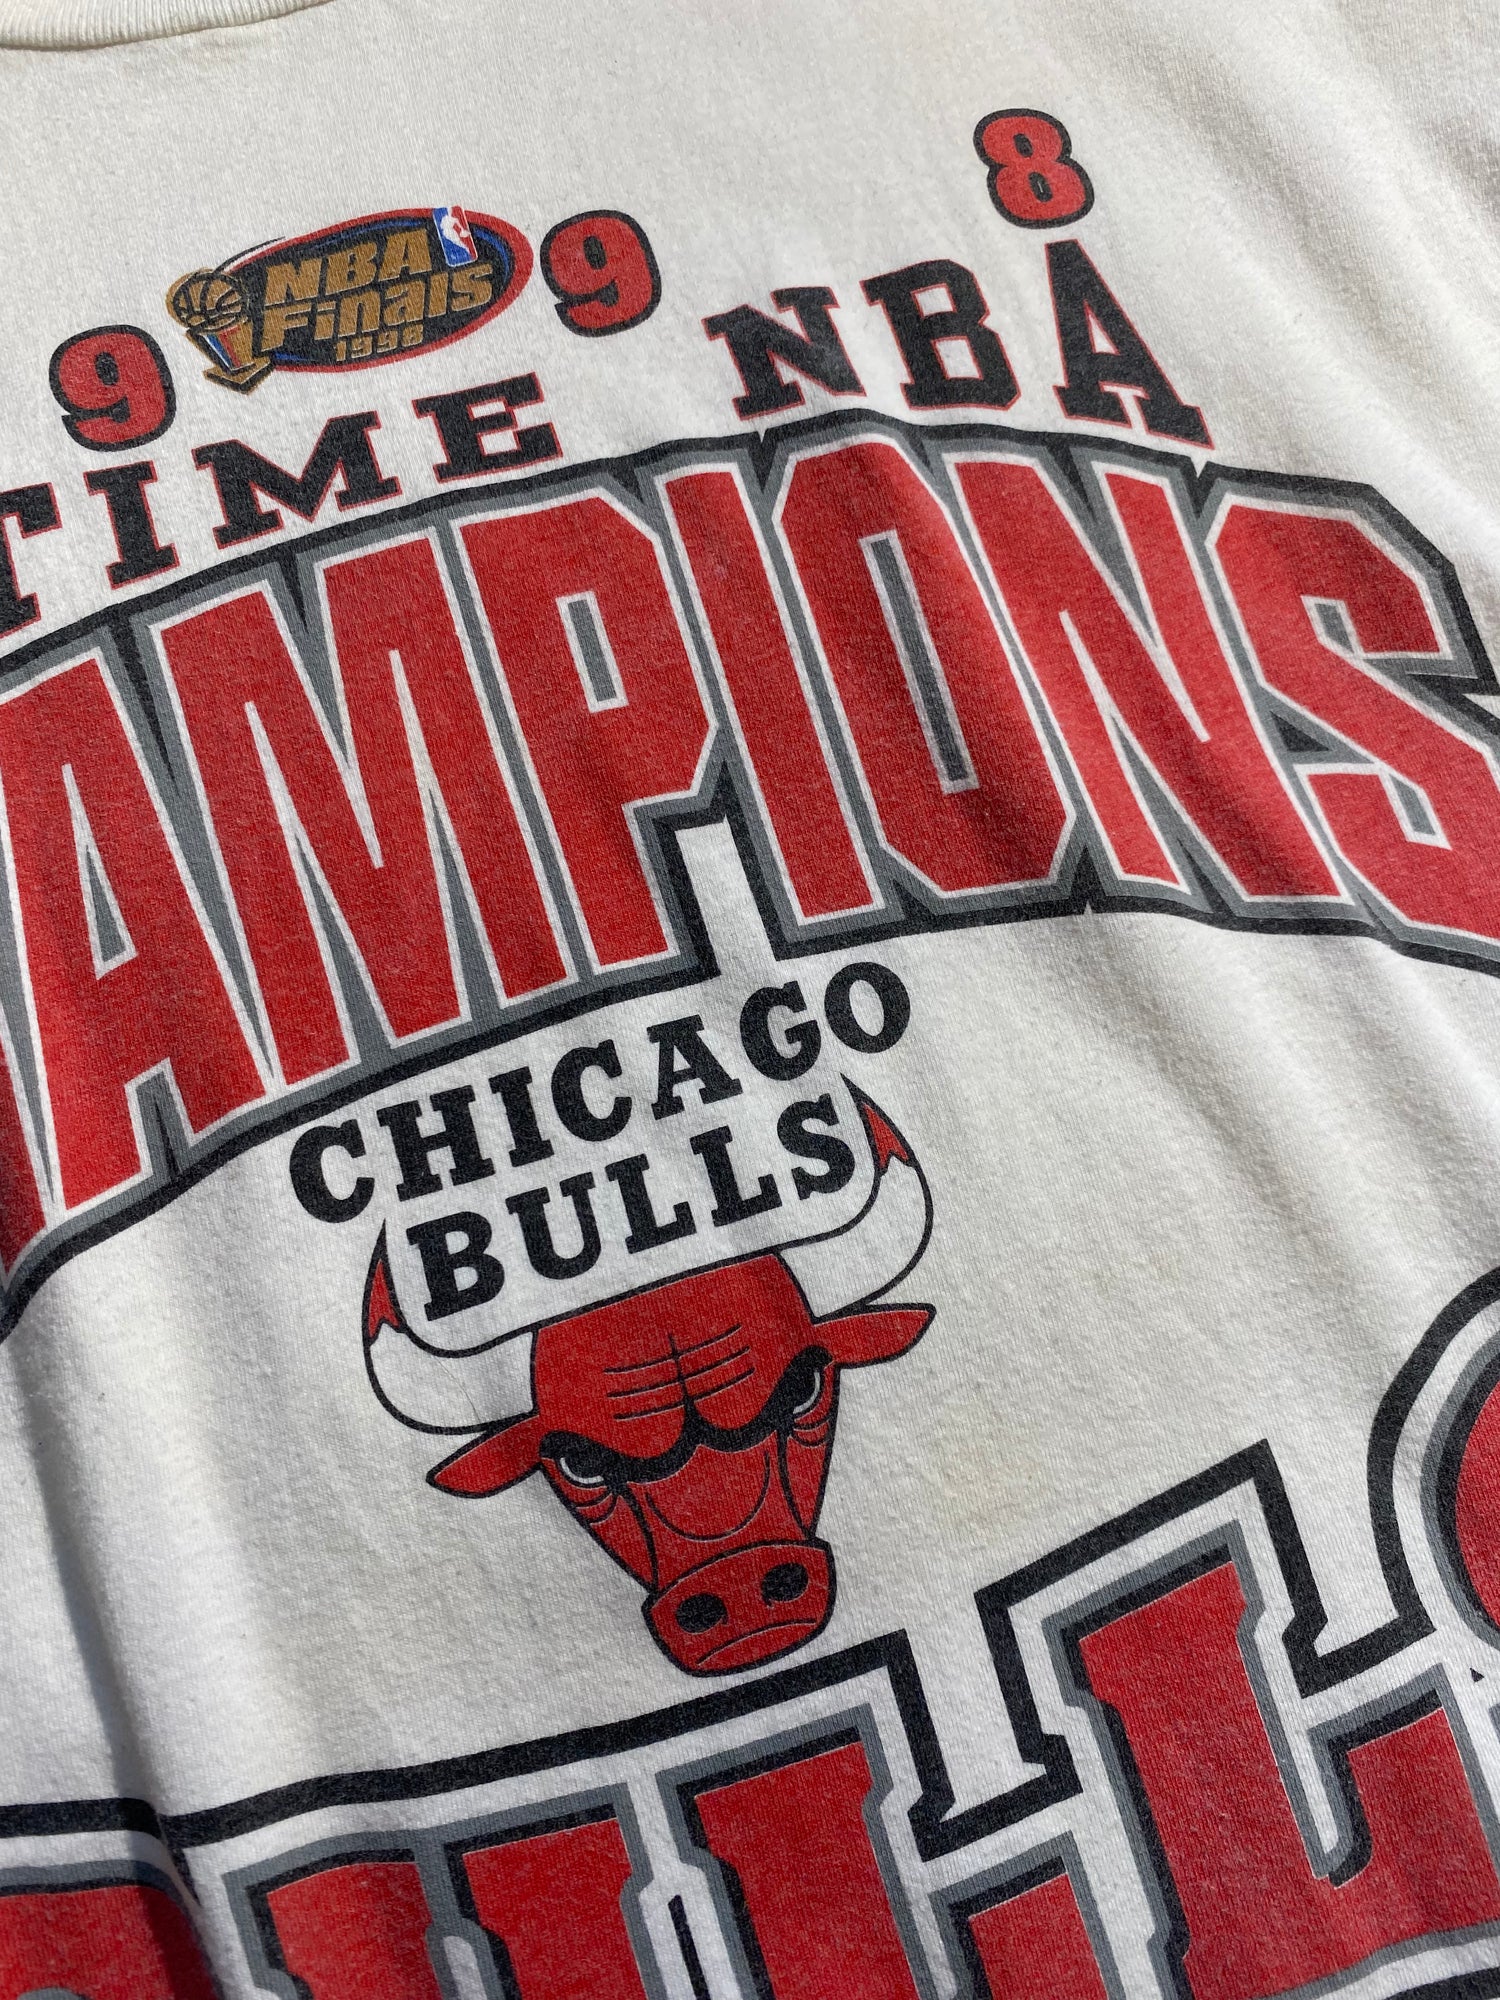 1998 Chicago Bulls 6 Times NBA Champions Shirt Vintage 90s 